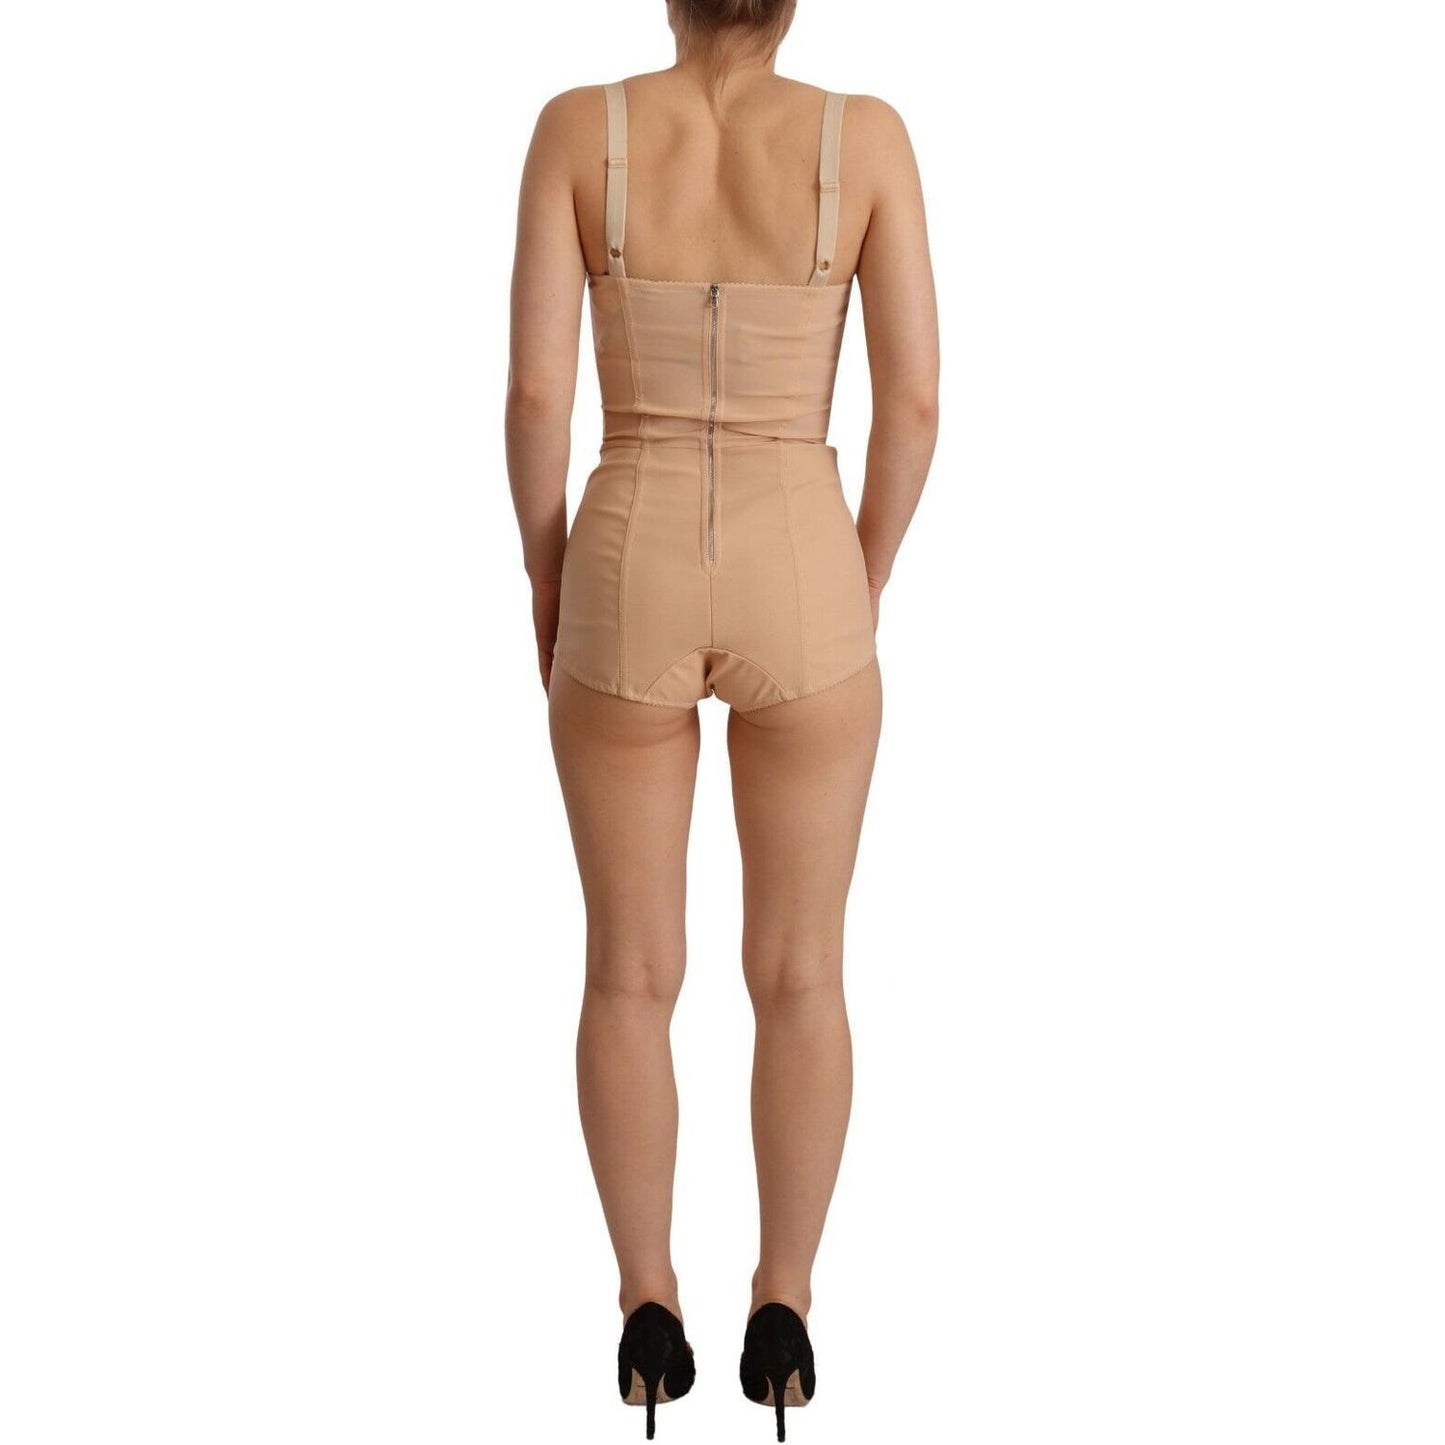 Dolce & Gabbana Beige Lace Panel Stretch Bodysuit beige-lace-panel-stretch-bodysuit